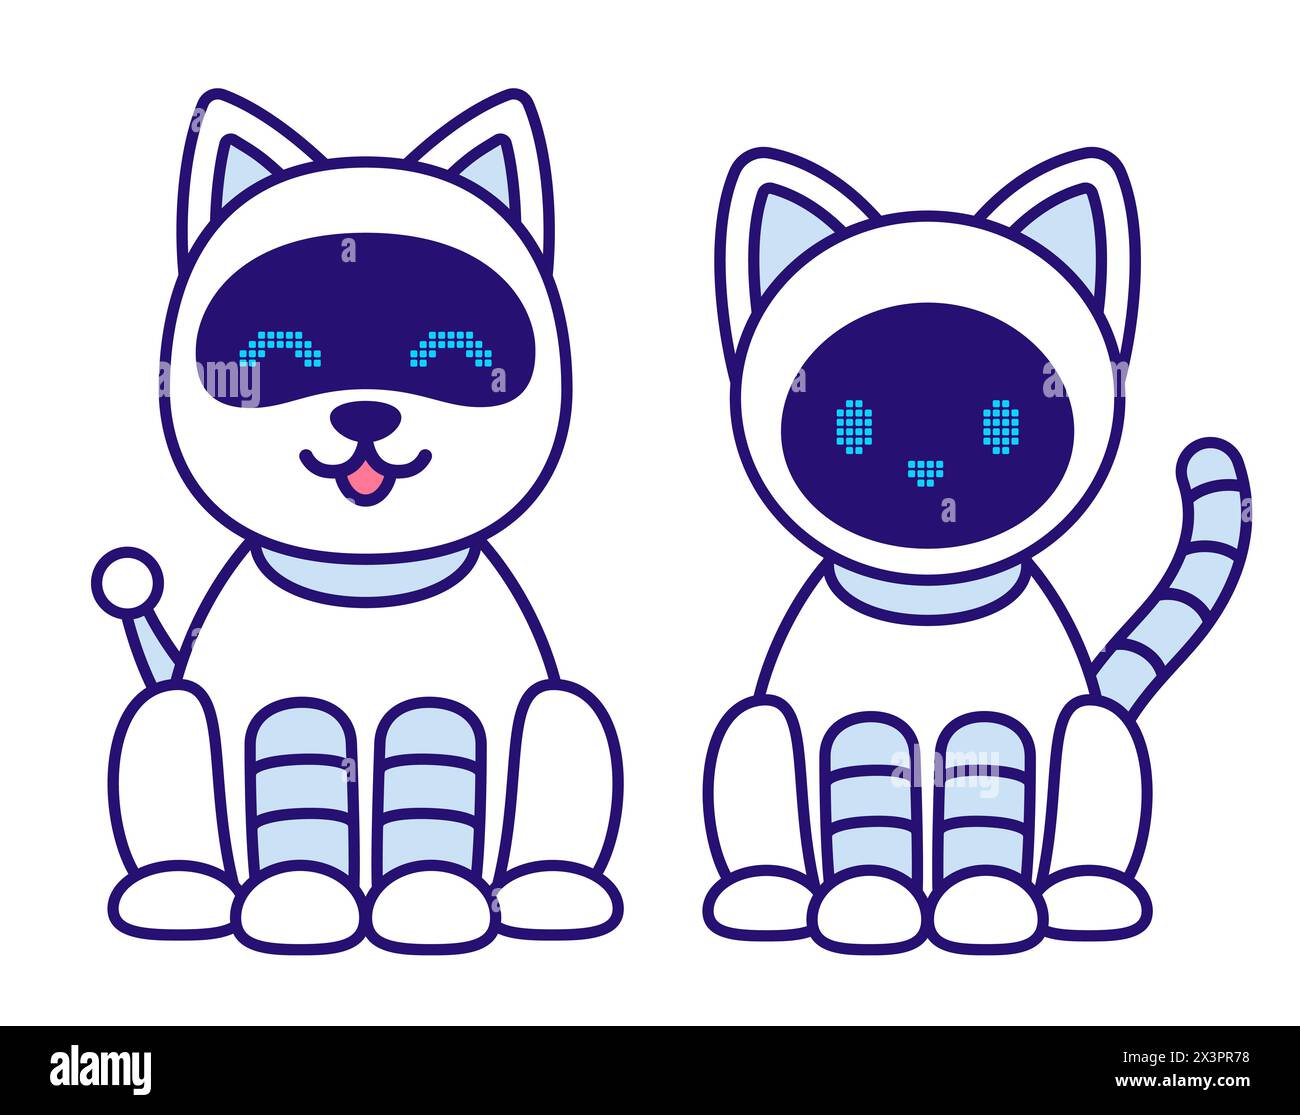 Cat and dog robot. Cute cartoon electronic pets, simple kawaii vector illustration. Stock Vector